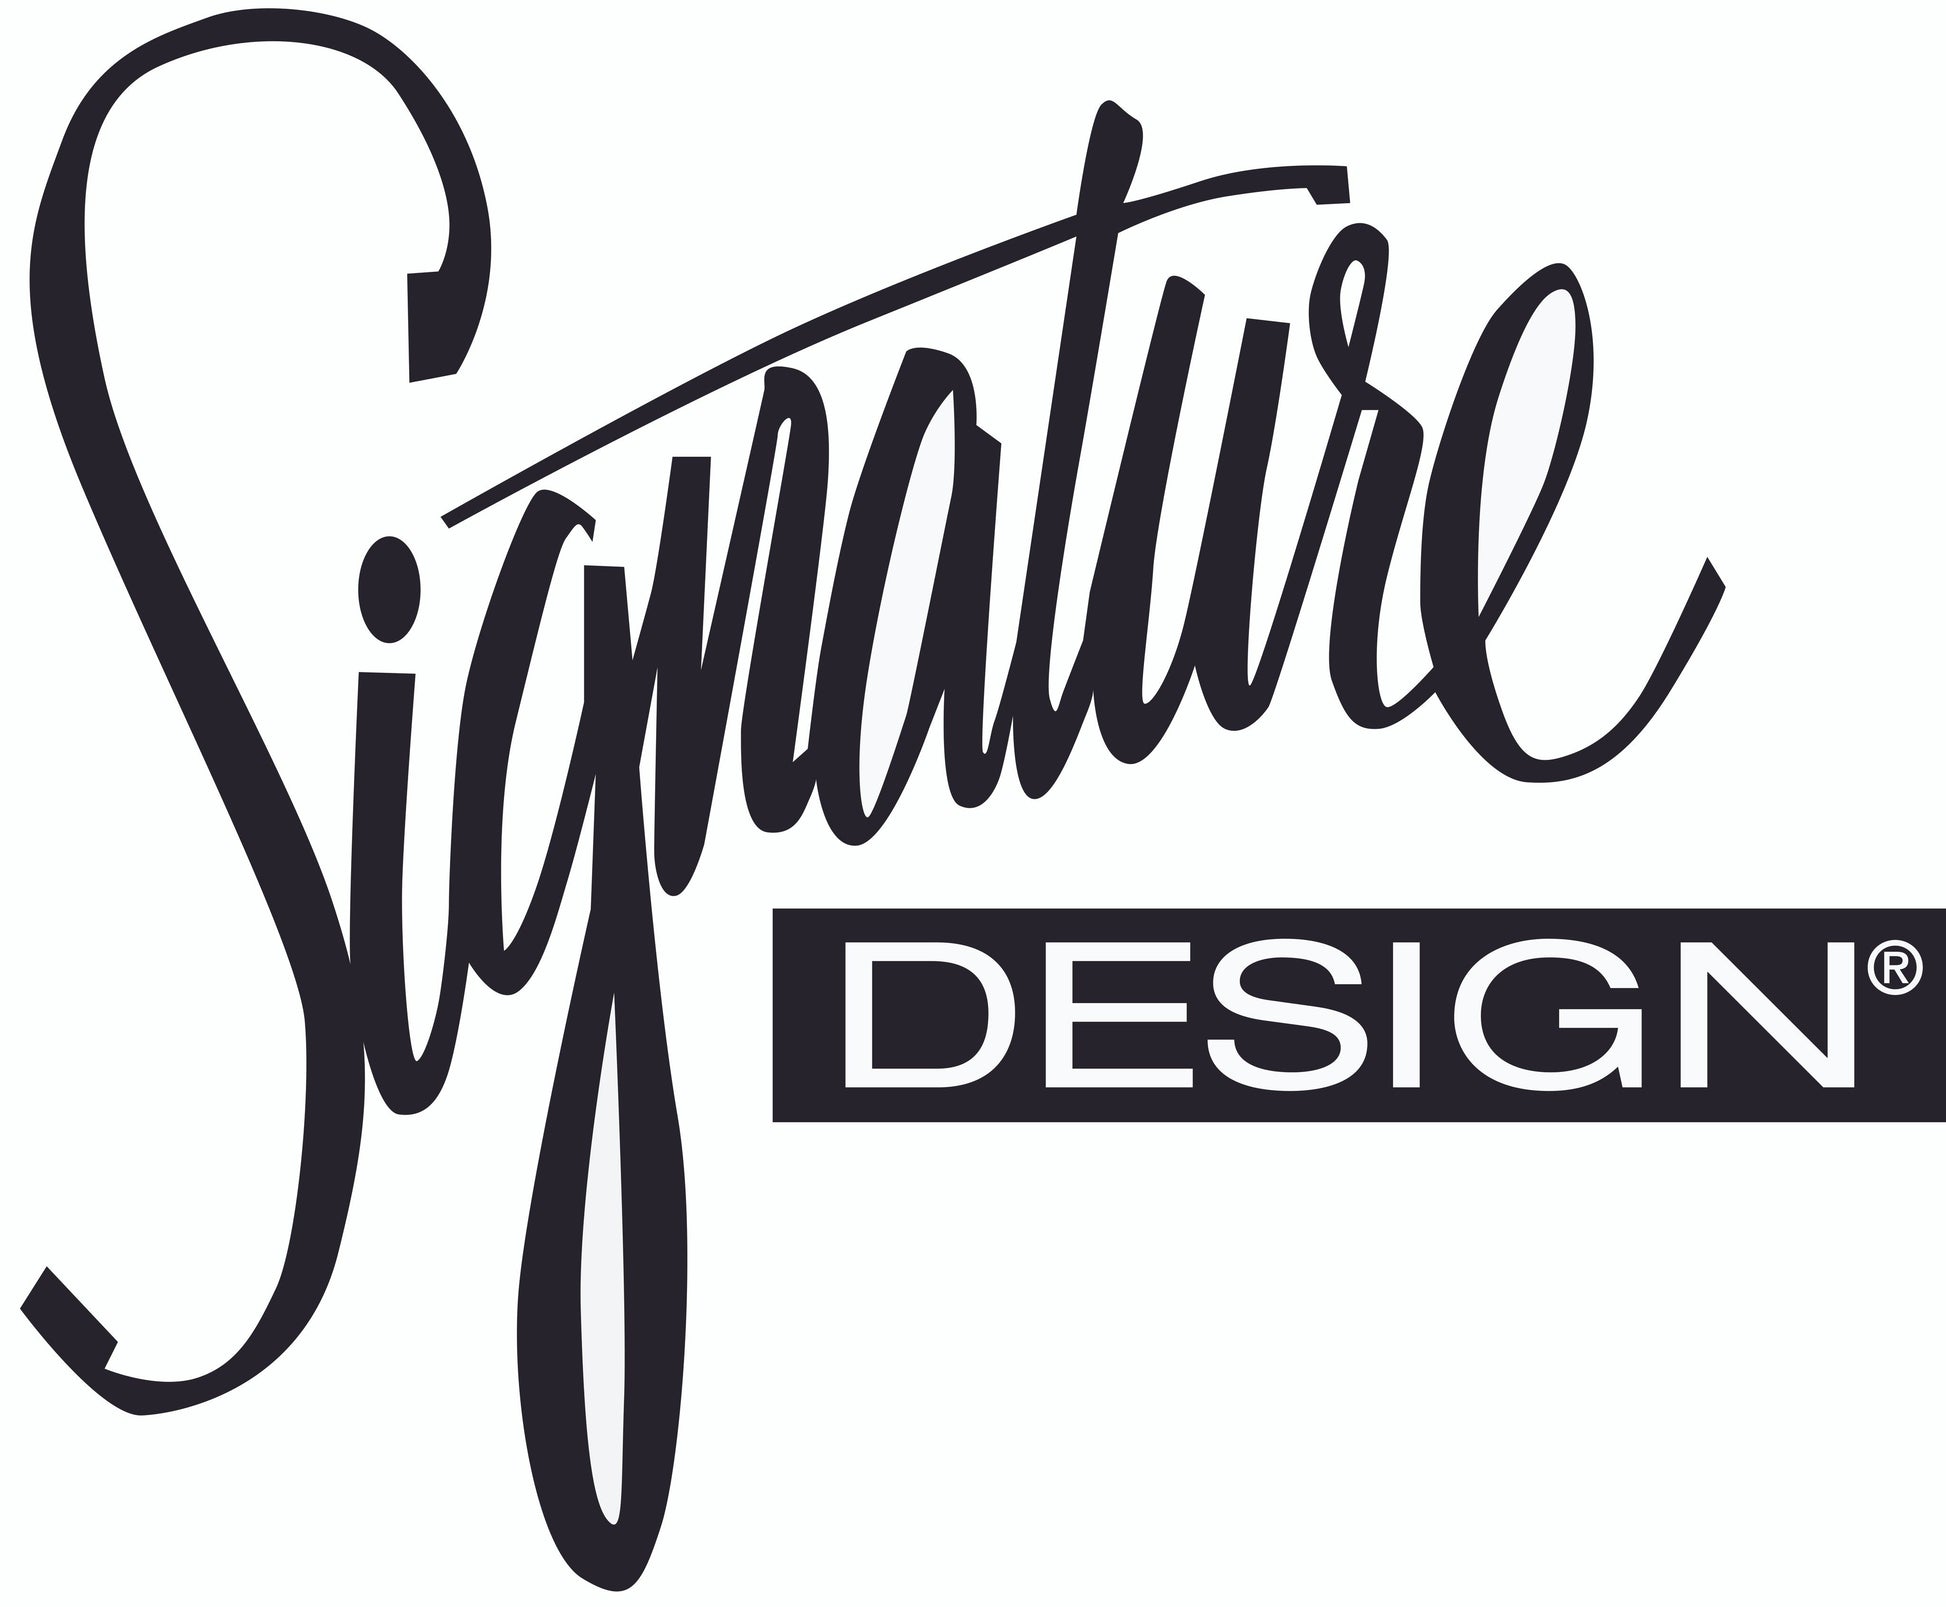 Olinger Metal Table Lamp (1/CN) Signature Design by Ashley®